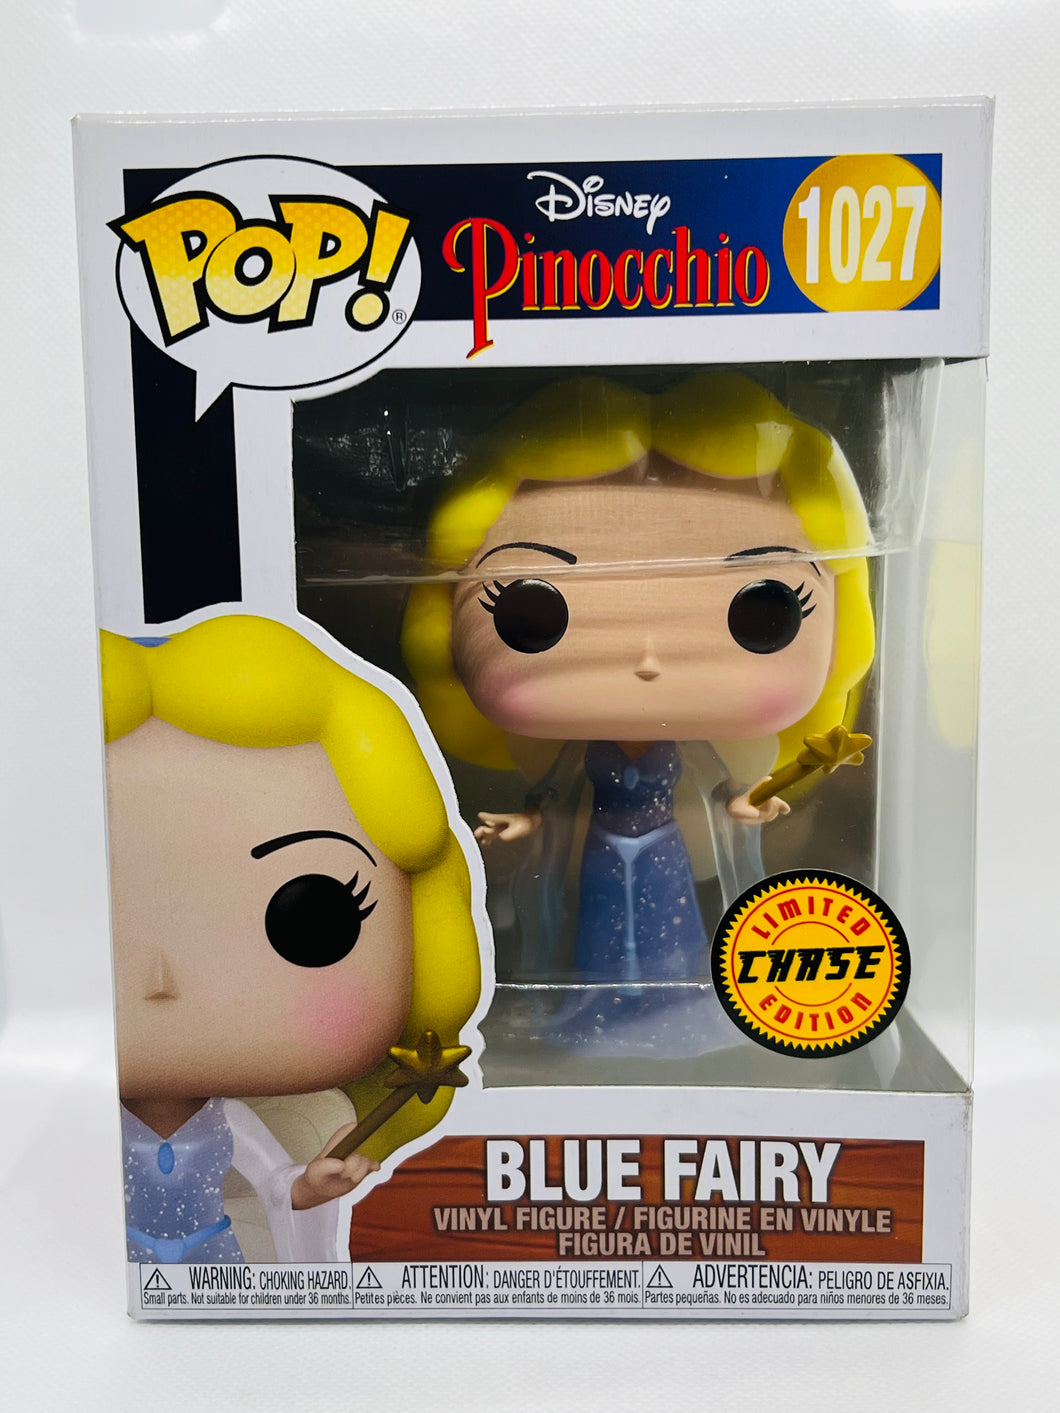 Blue Fairy 1027 Disney Pinocchio Limited Edition Chase Funko Pop